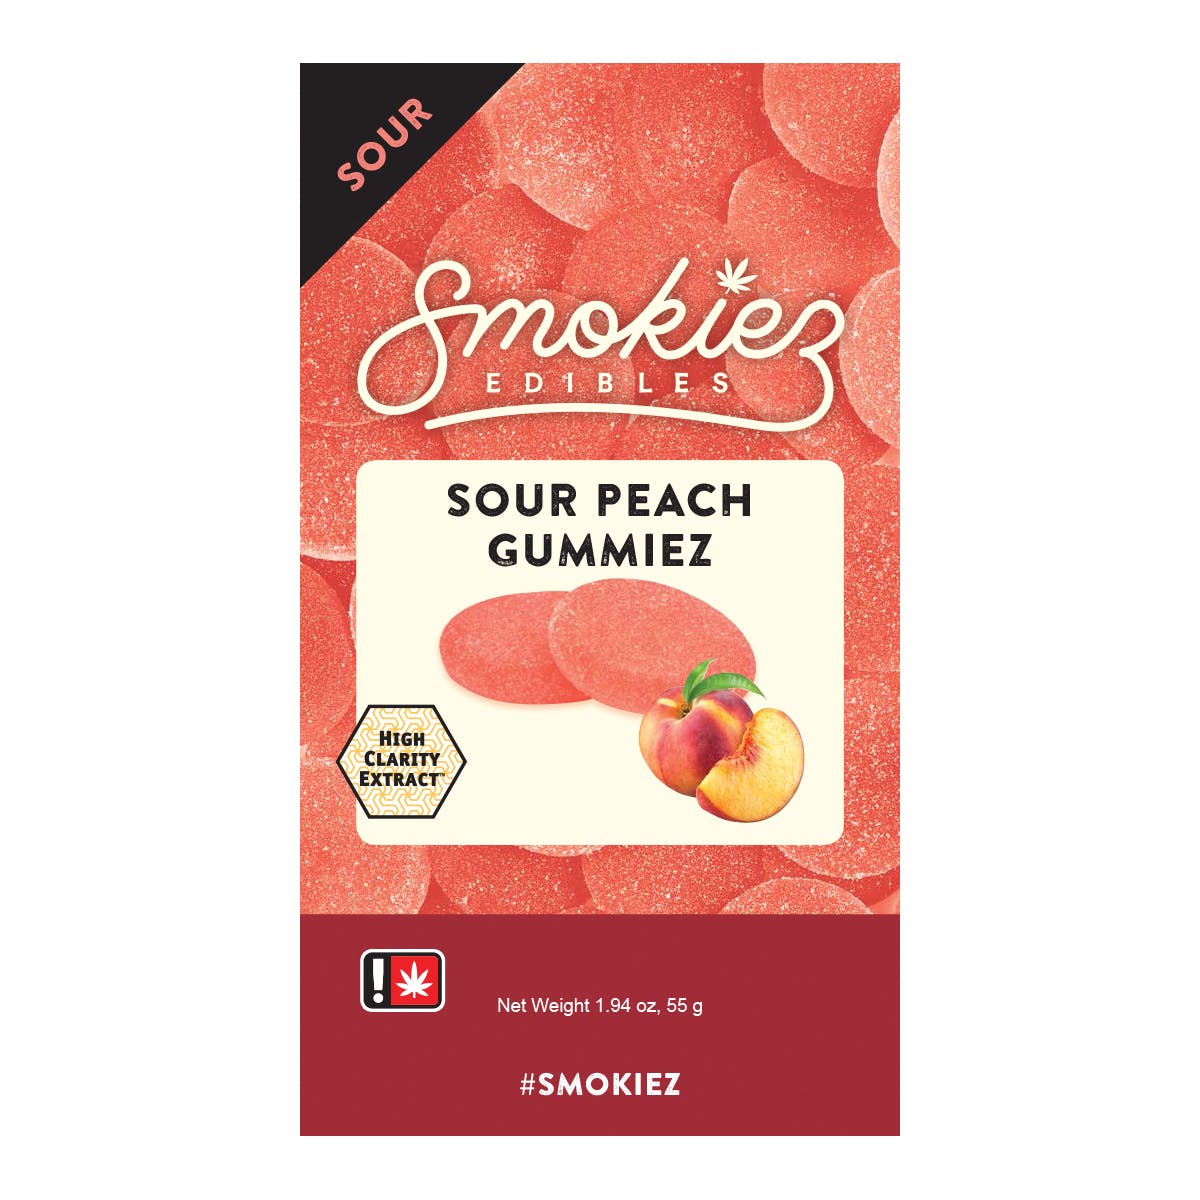 edible-smokiez-edibles-sour-peach-gummiez-2c-50-mg